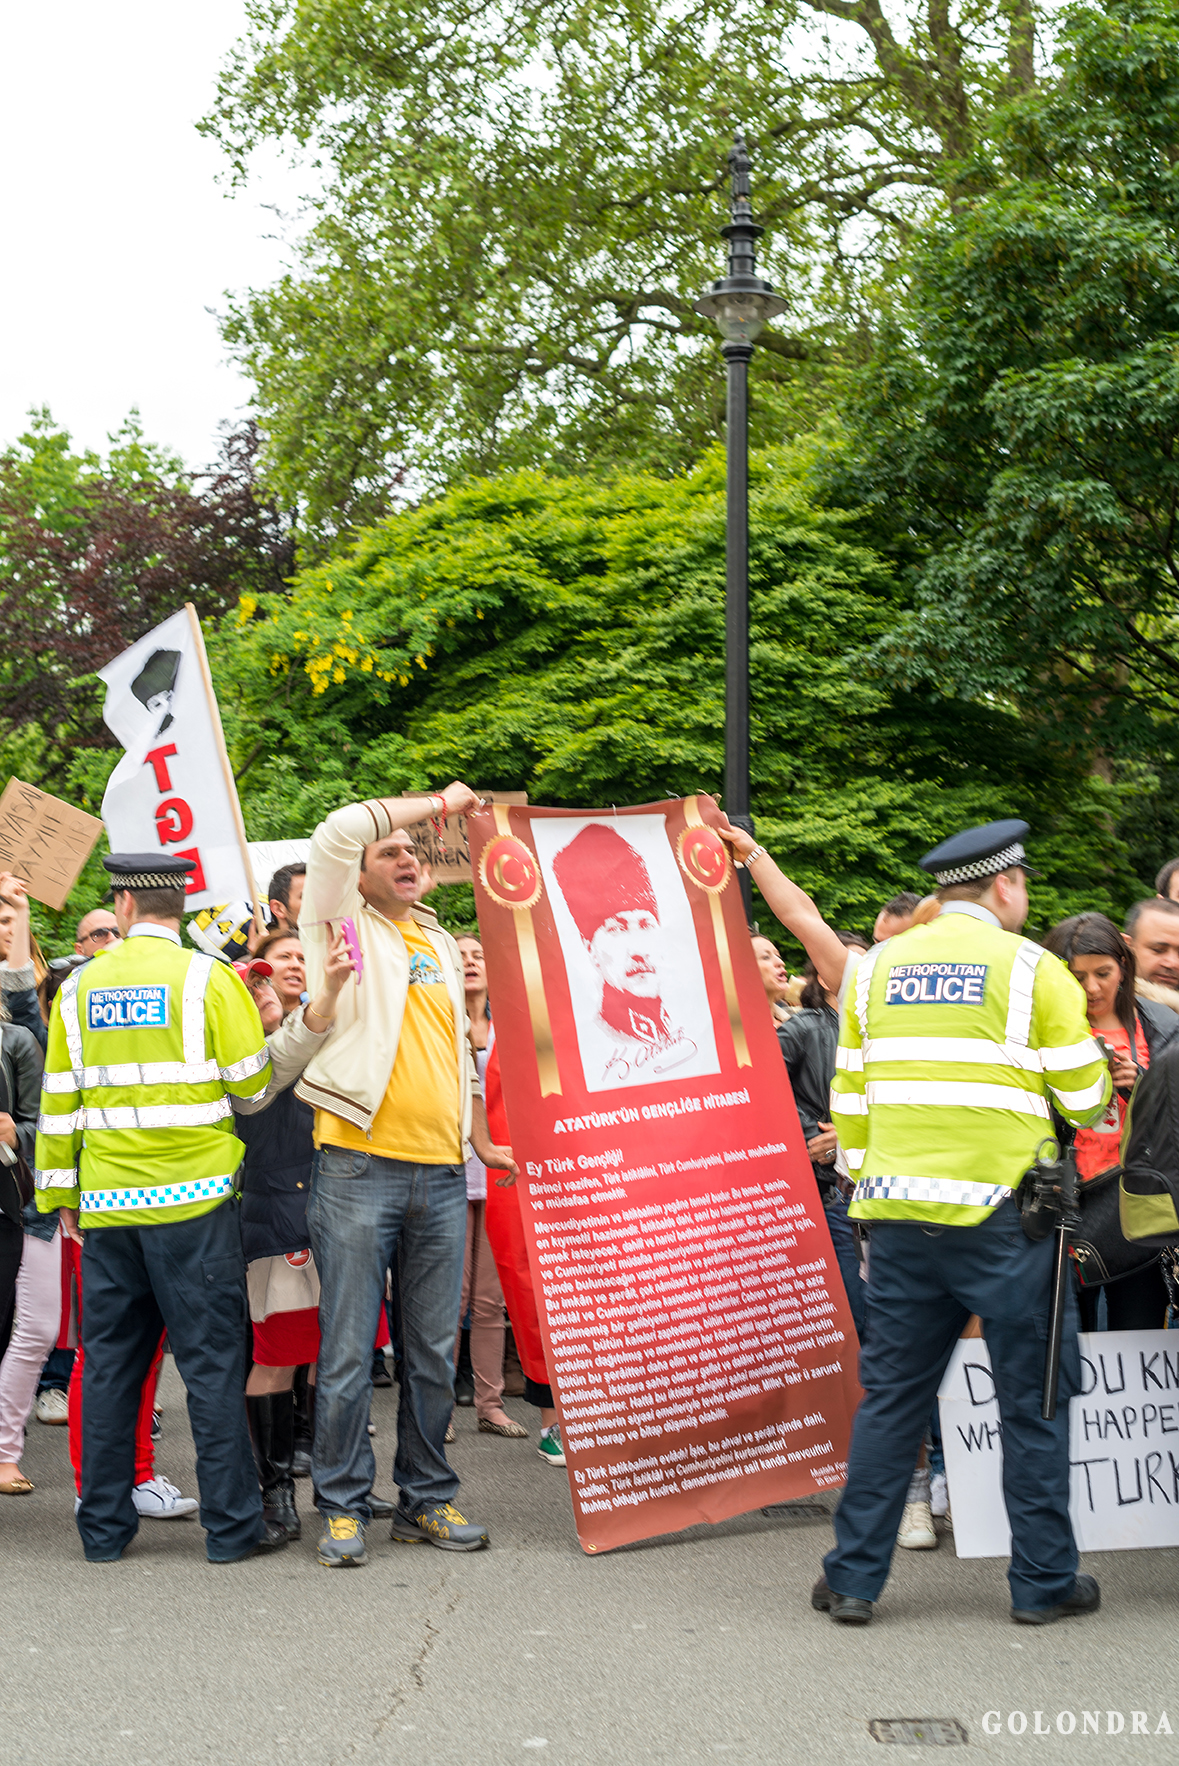 Protesting Turkish Government - Turk Hukumetini Protesto - Londra - London (46)